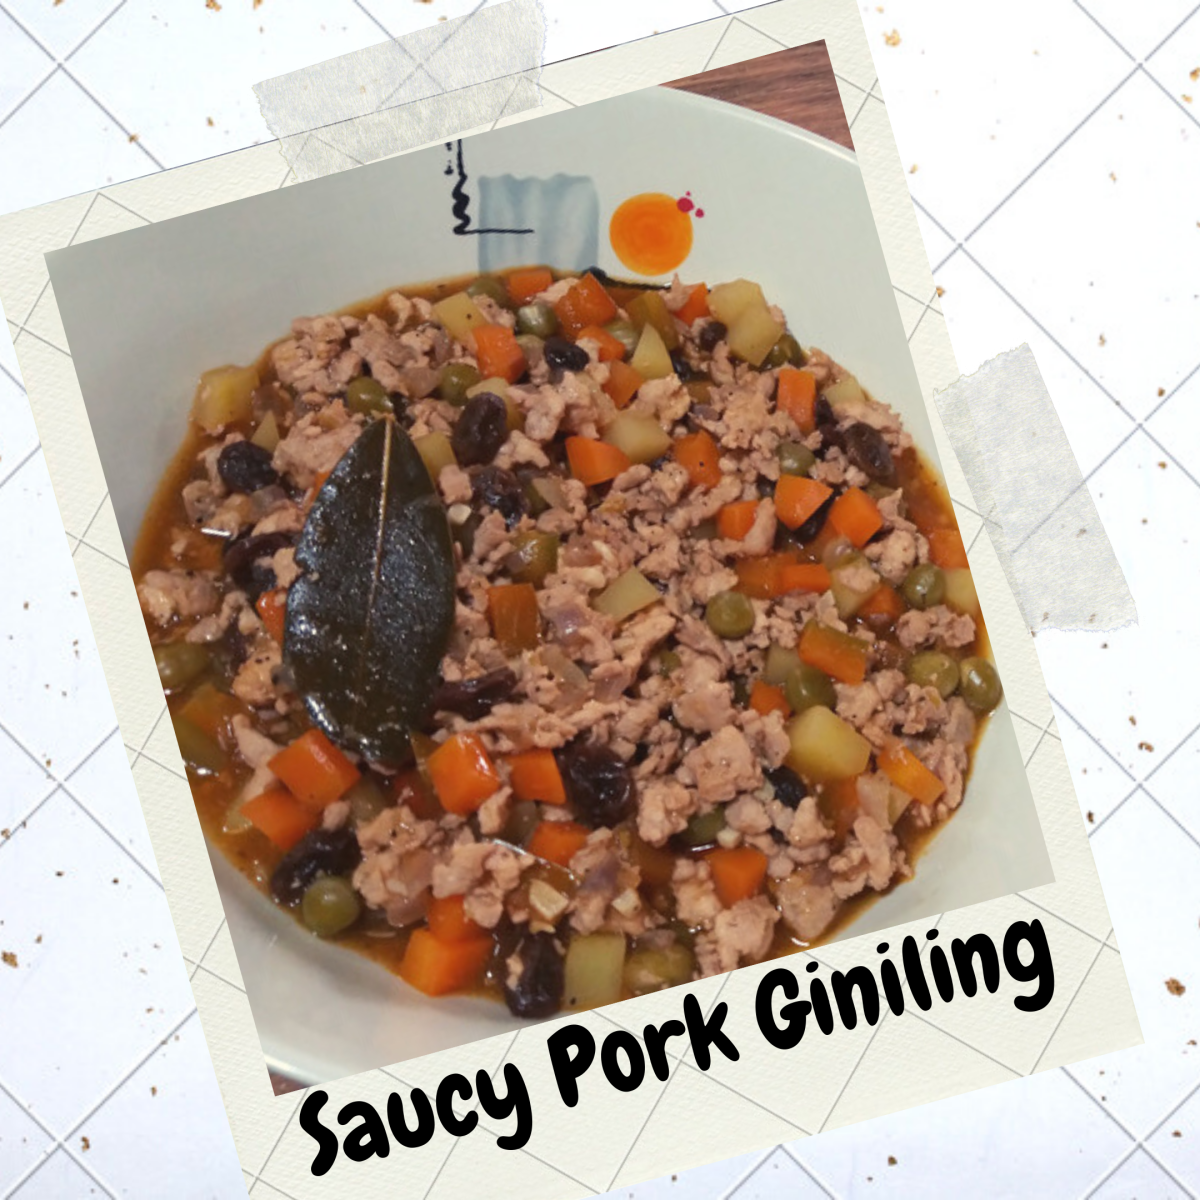 Saucy pork giniling is a popular Filipino dish.